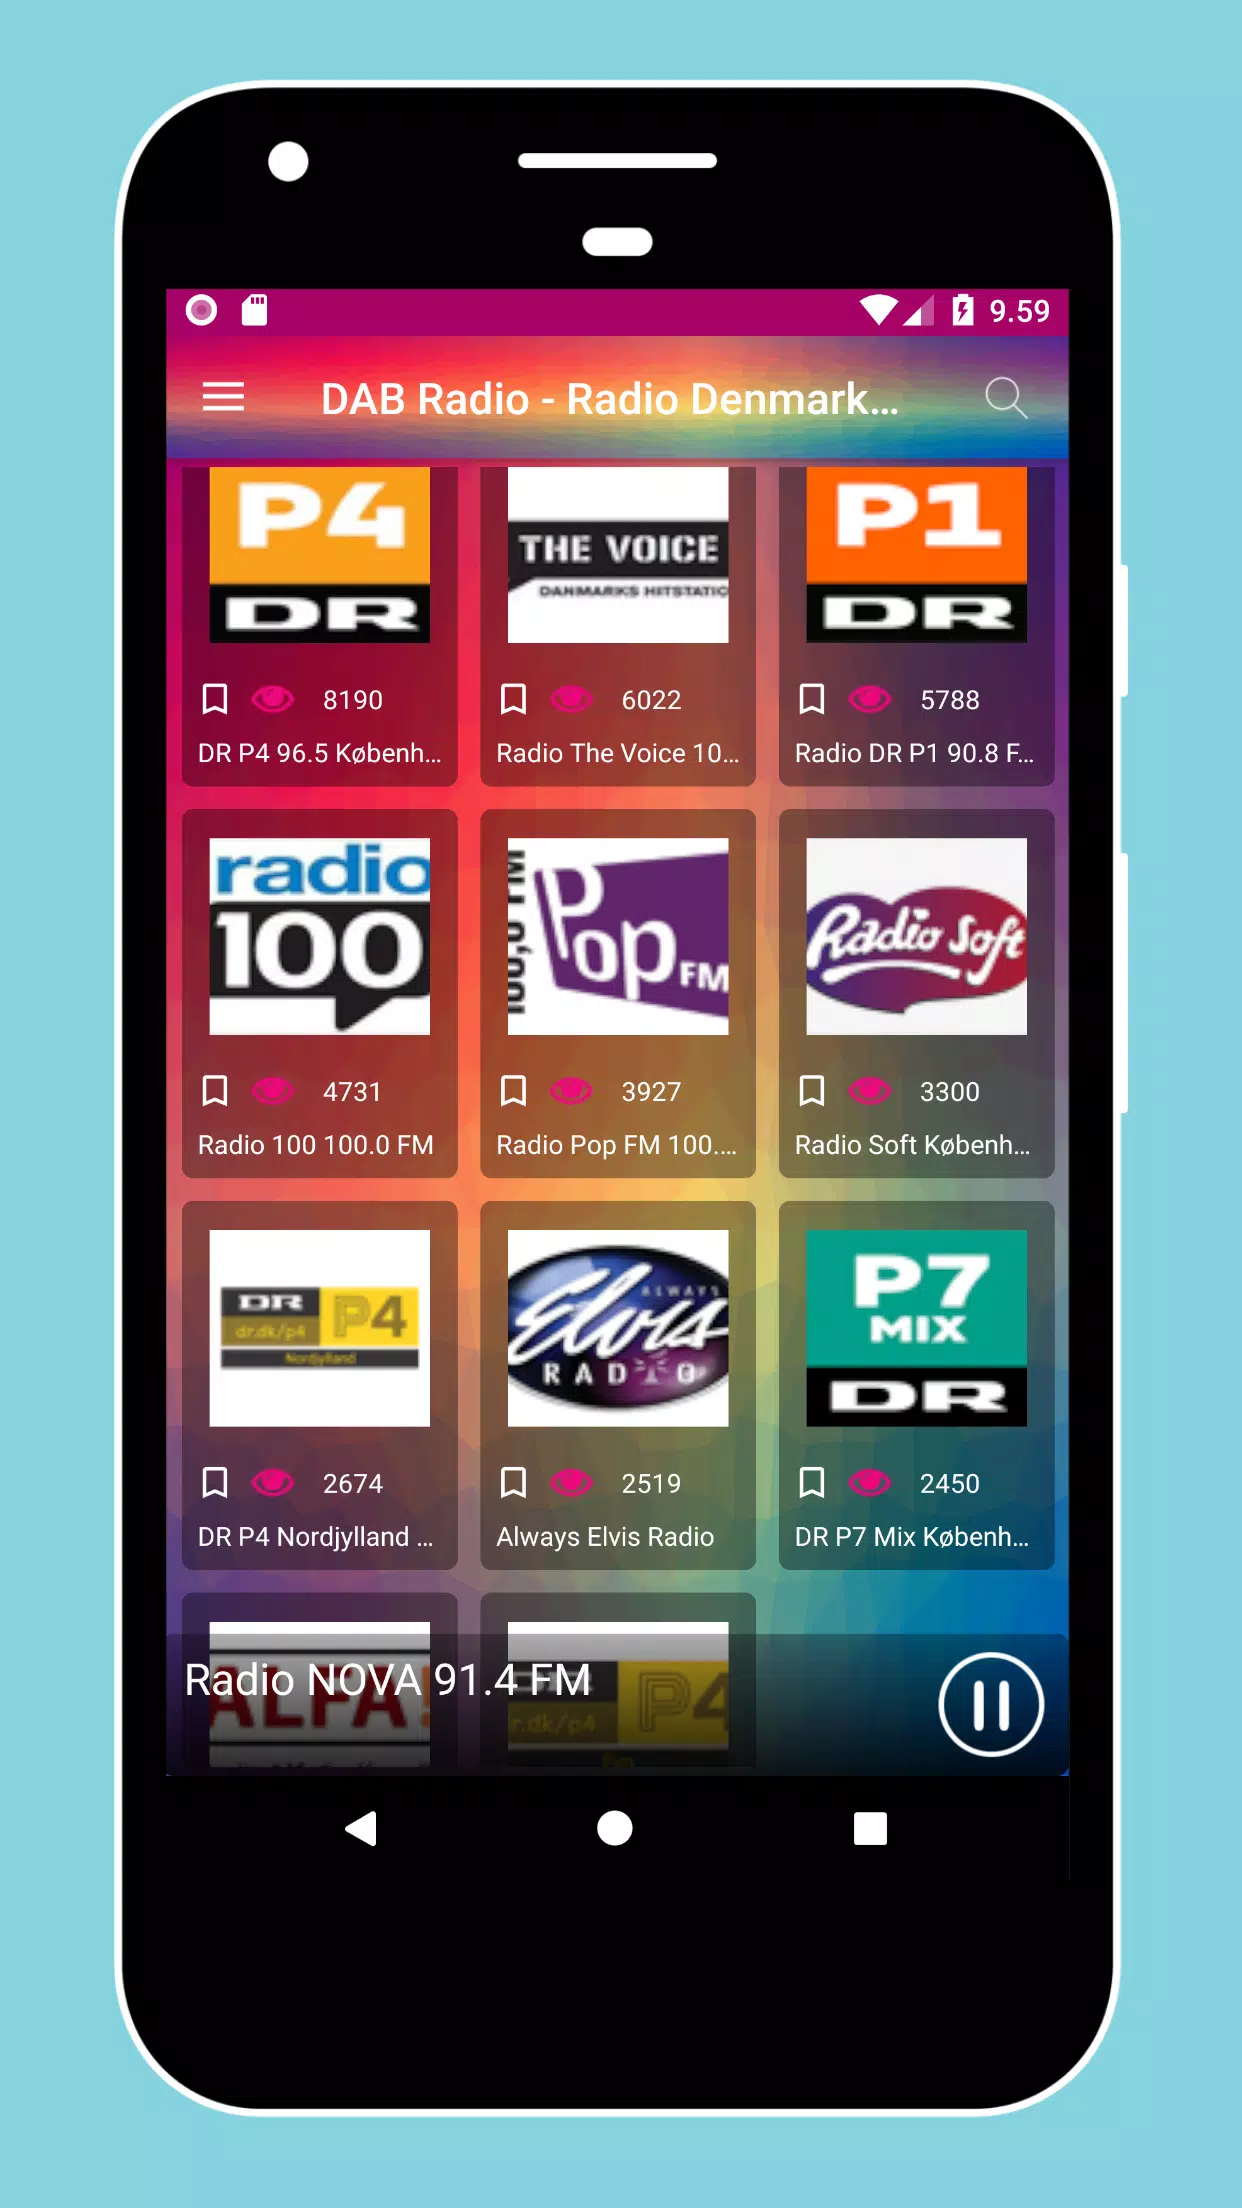 Radio Denmark - DAB Radio + Danish Radio Stations APK for Android Download